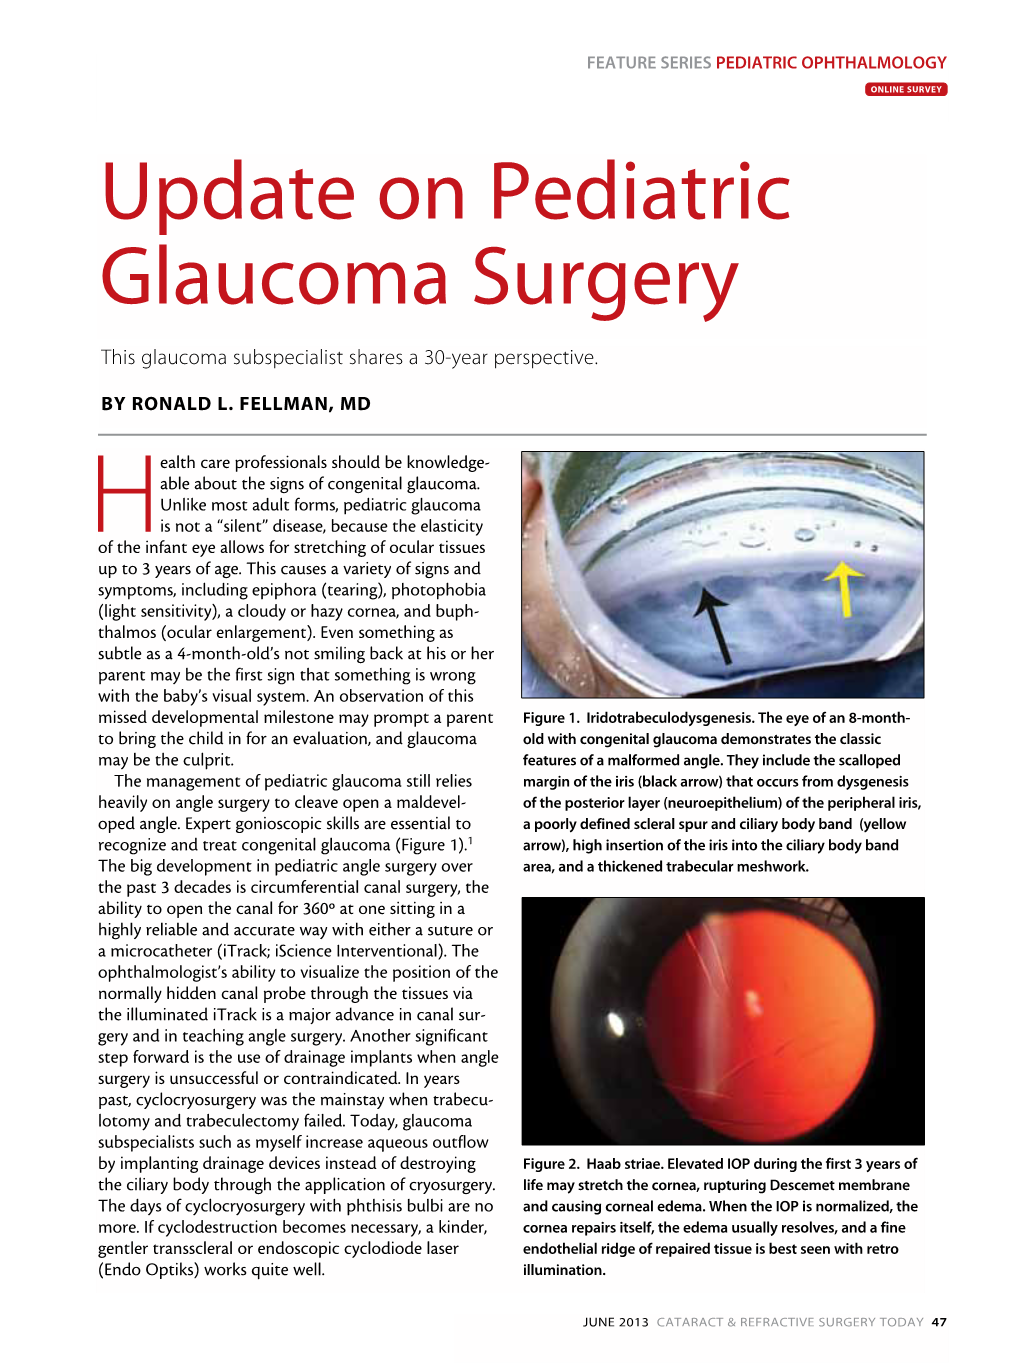 Update on Pediatric Glaucoma Surgery